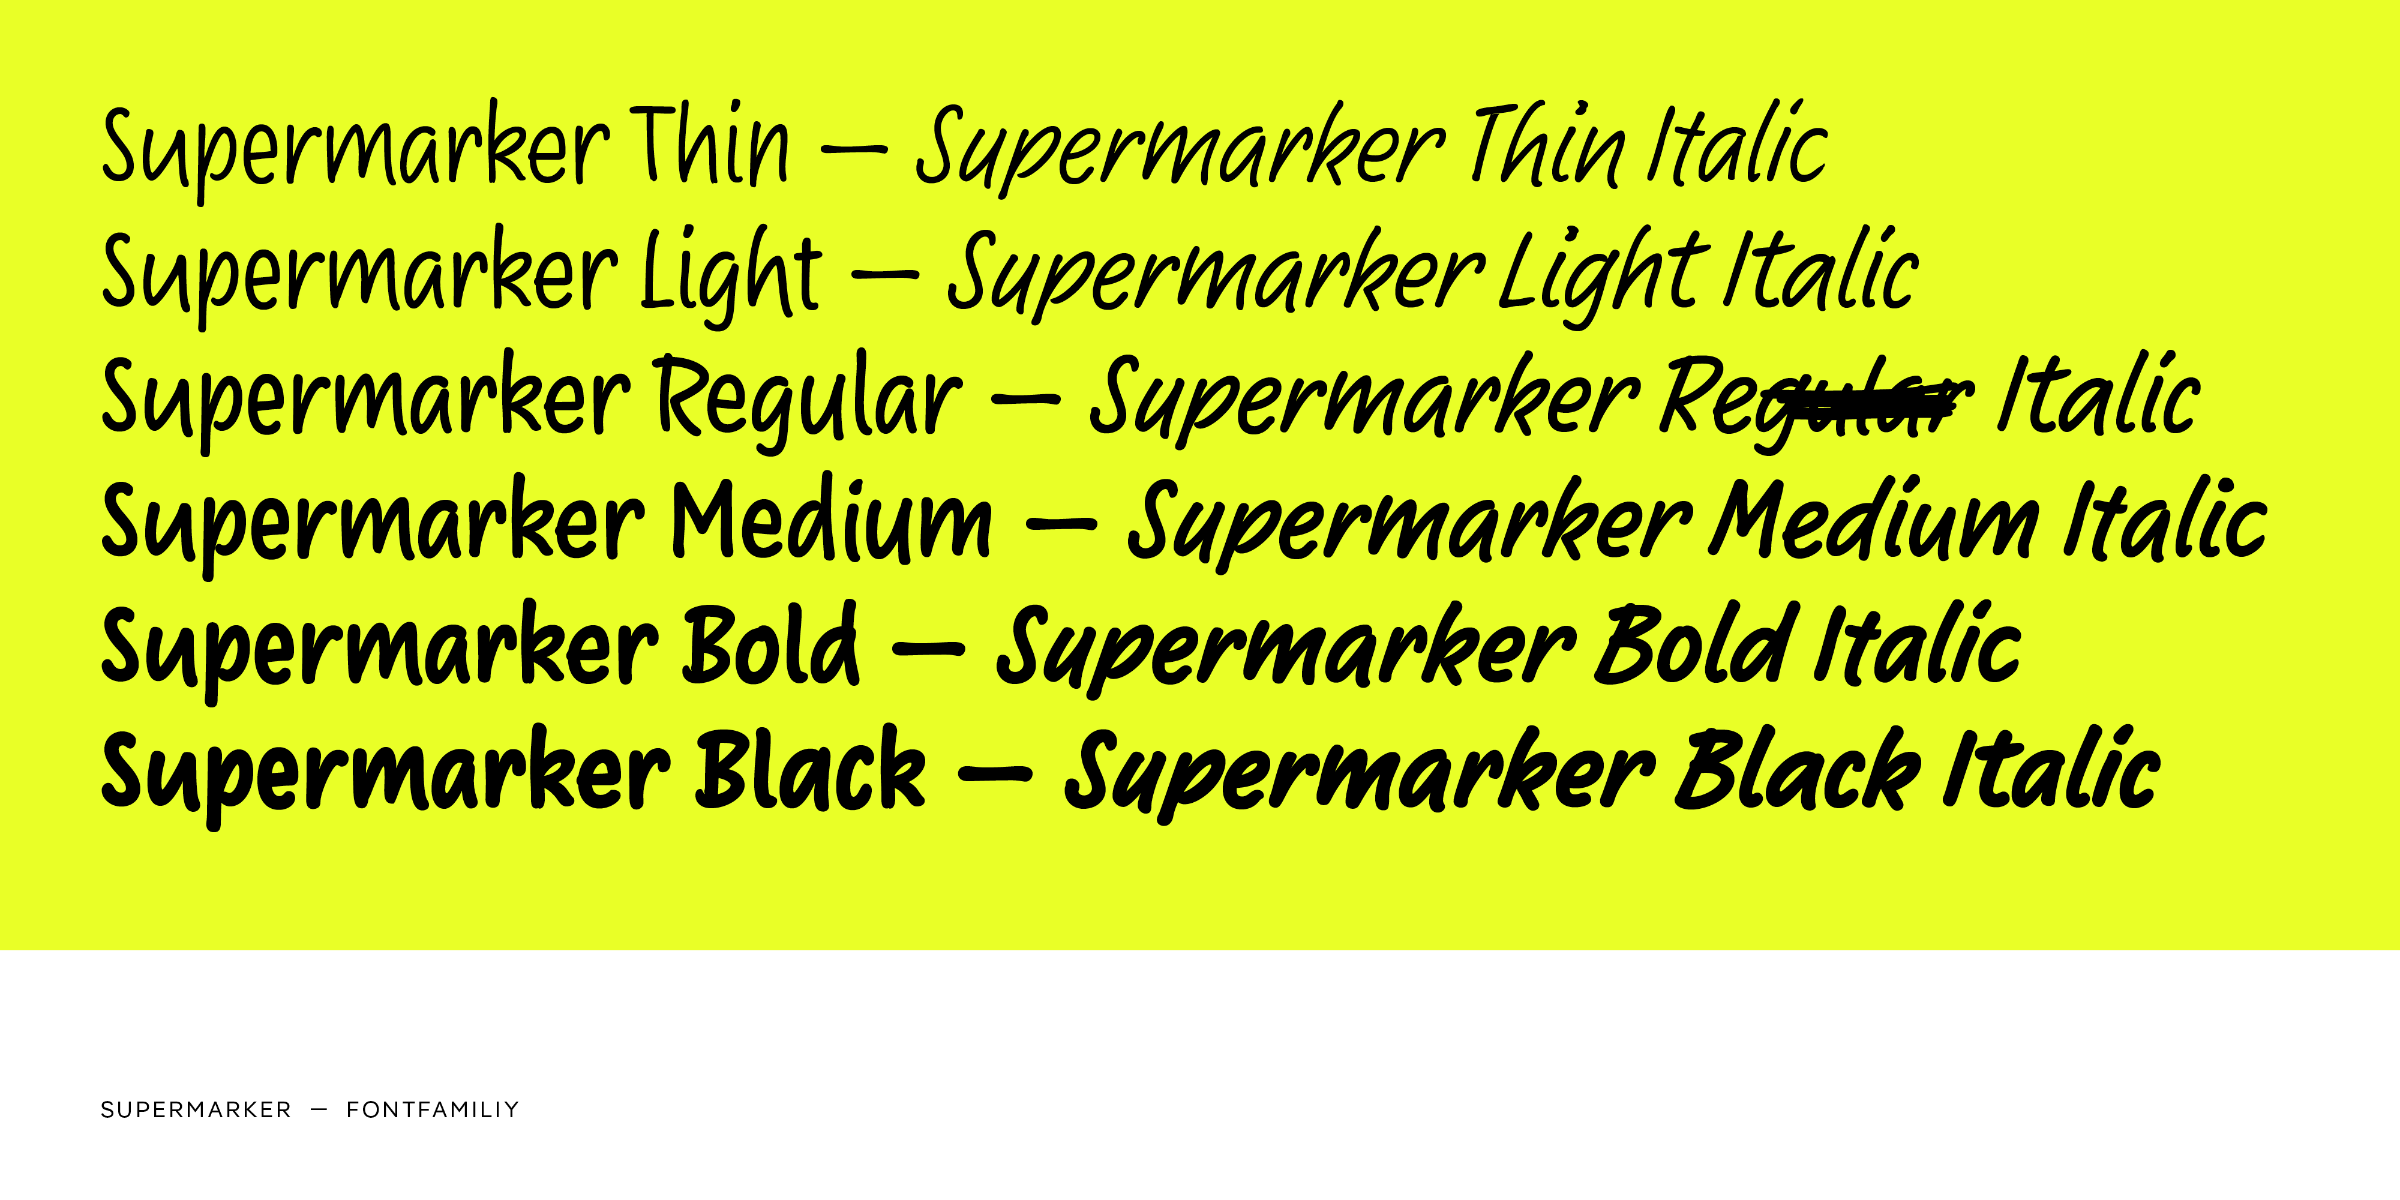 Supermarker’s 12 styles